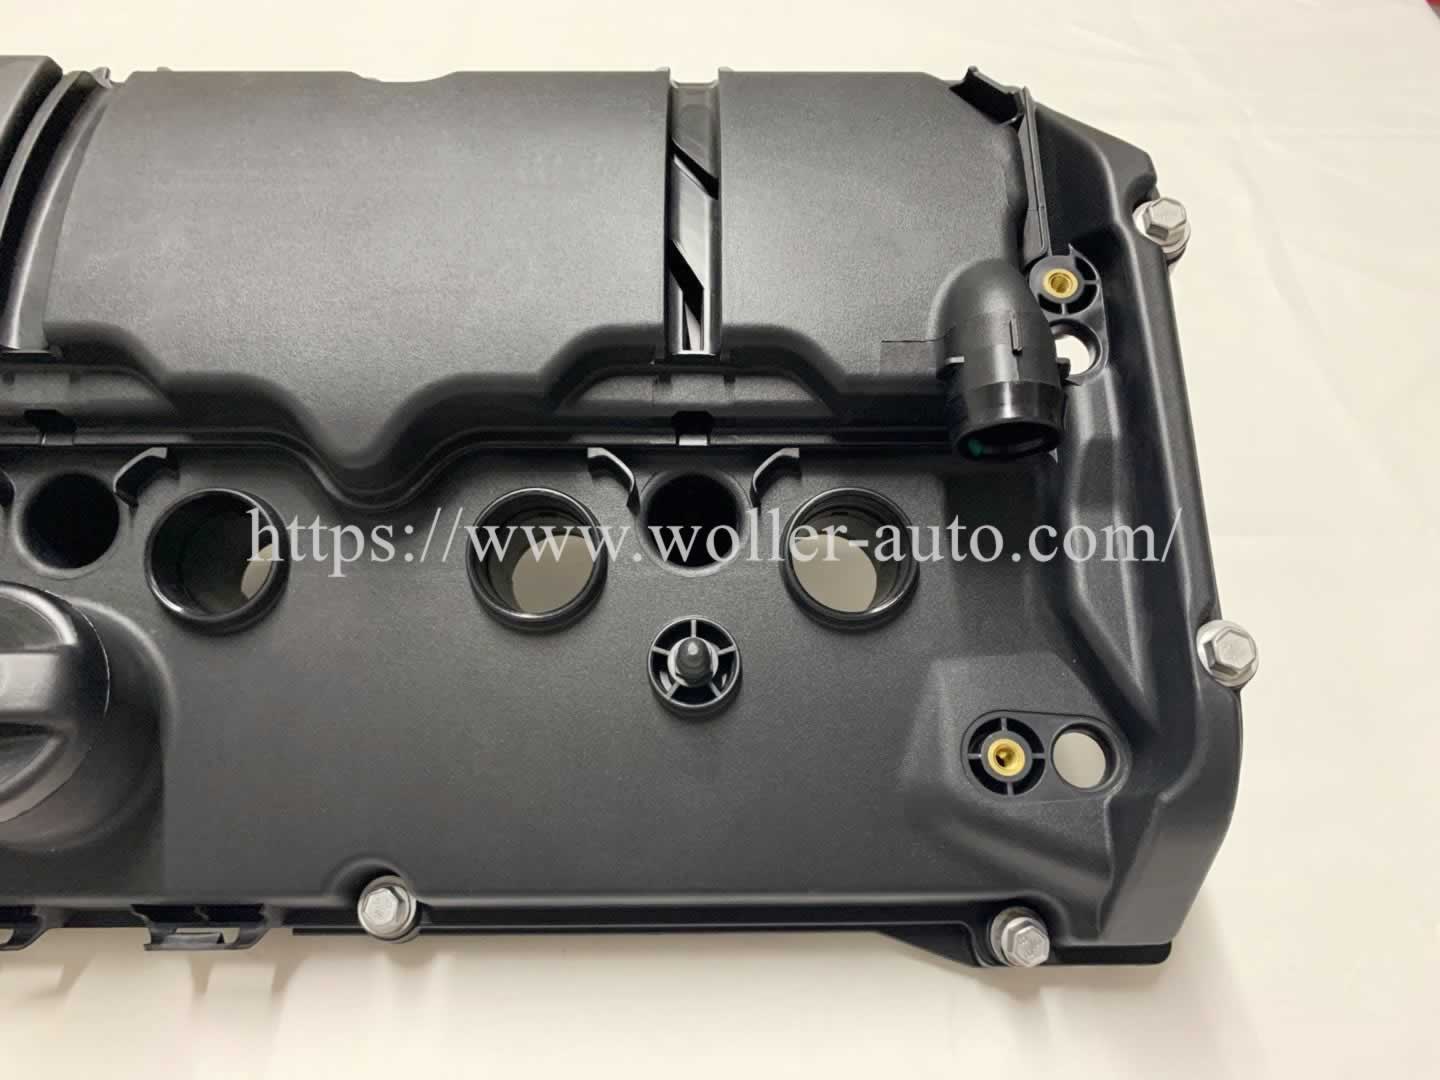 Genuine German Quality Engine Cylinder Head Rocker Cover 102240 0248.S7 V758239780 For Peugeot 208 GTi 1.6 THP 5G04